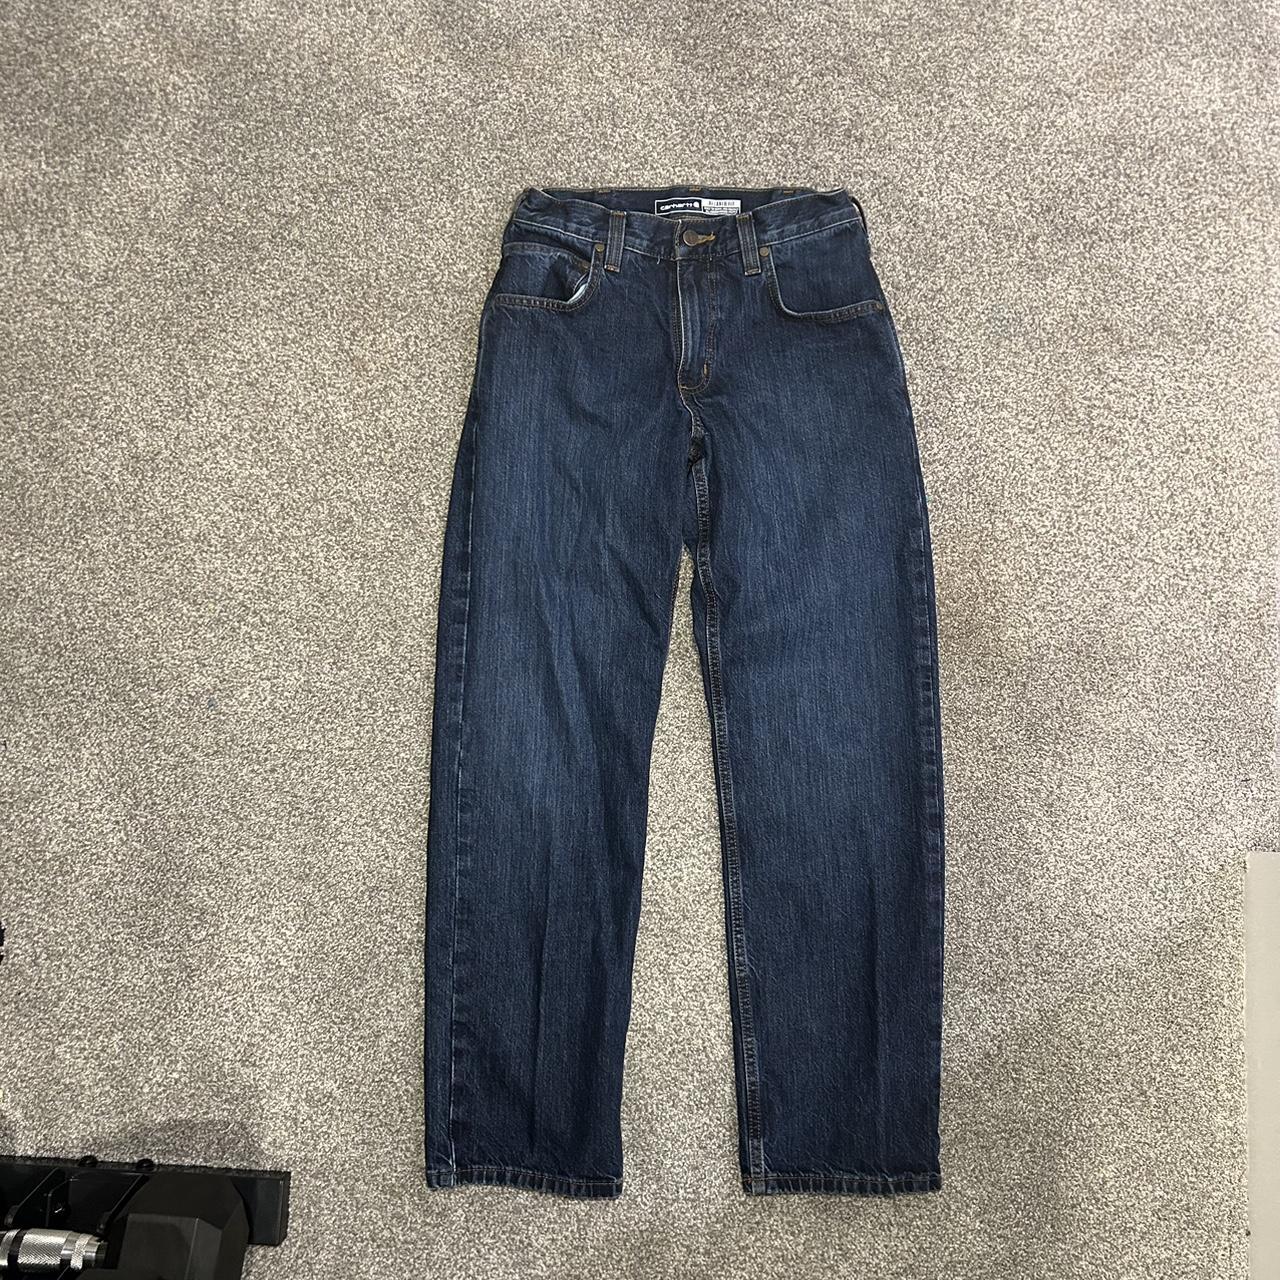 carhartt dark wash jeans 29x30 relaxed fit - Depop